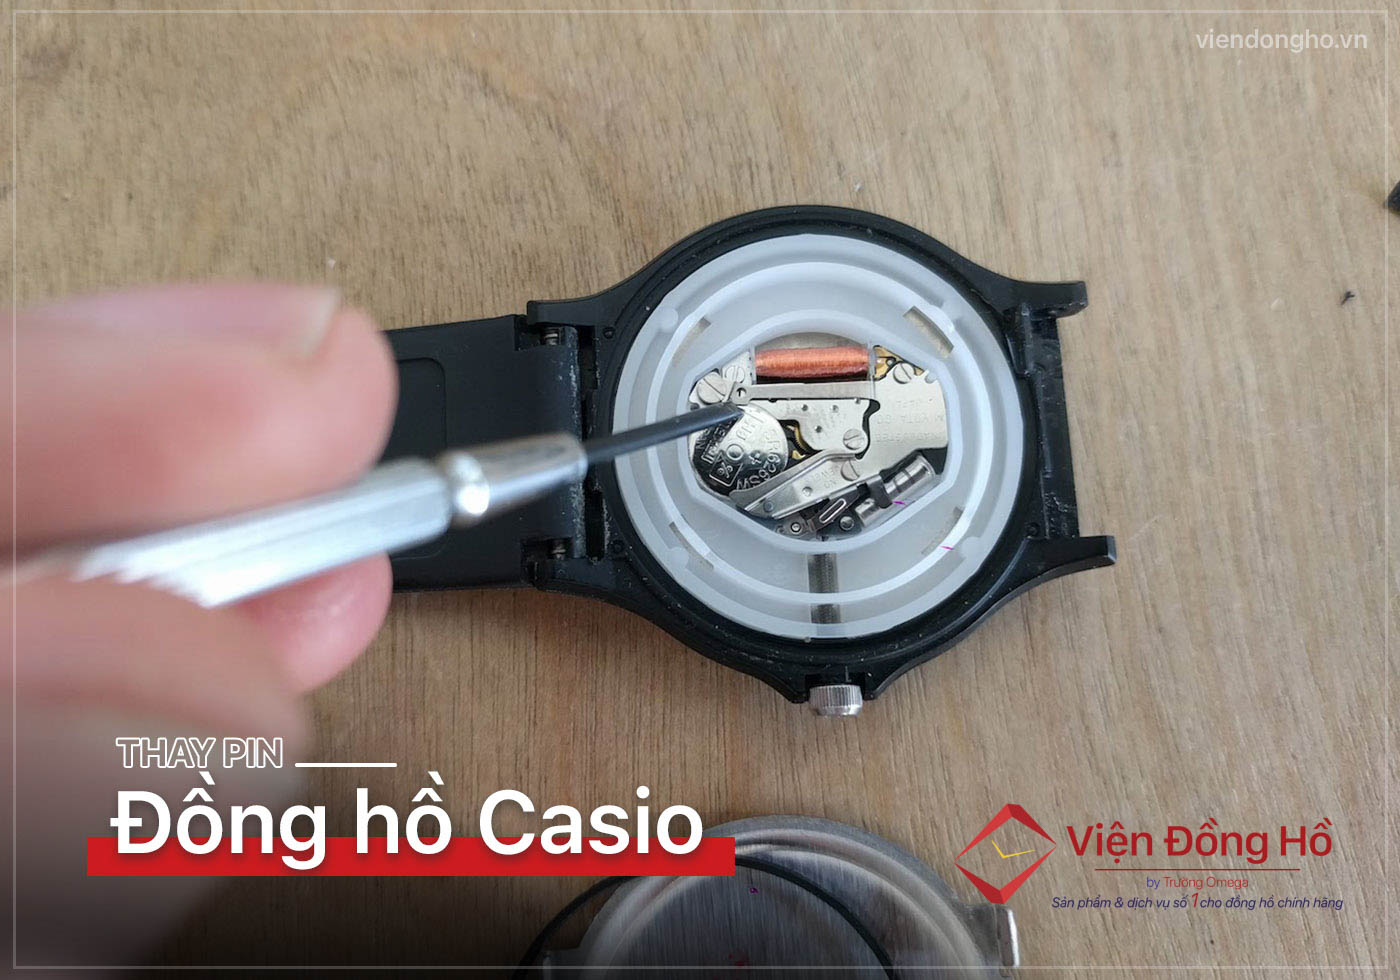 Thay pin dong ho Casio 5